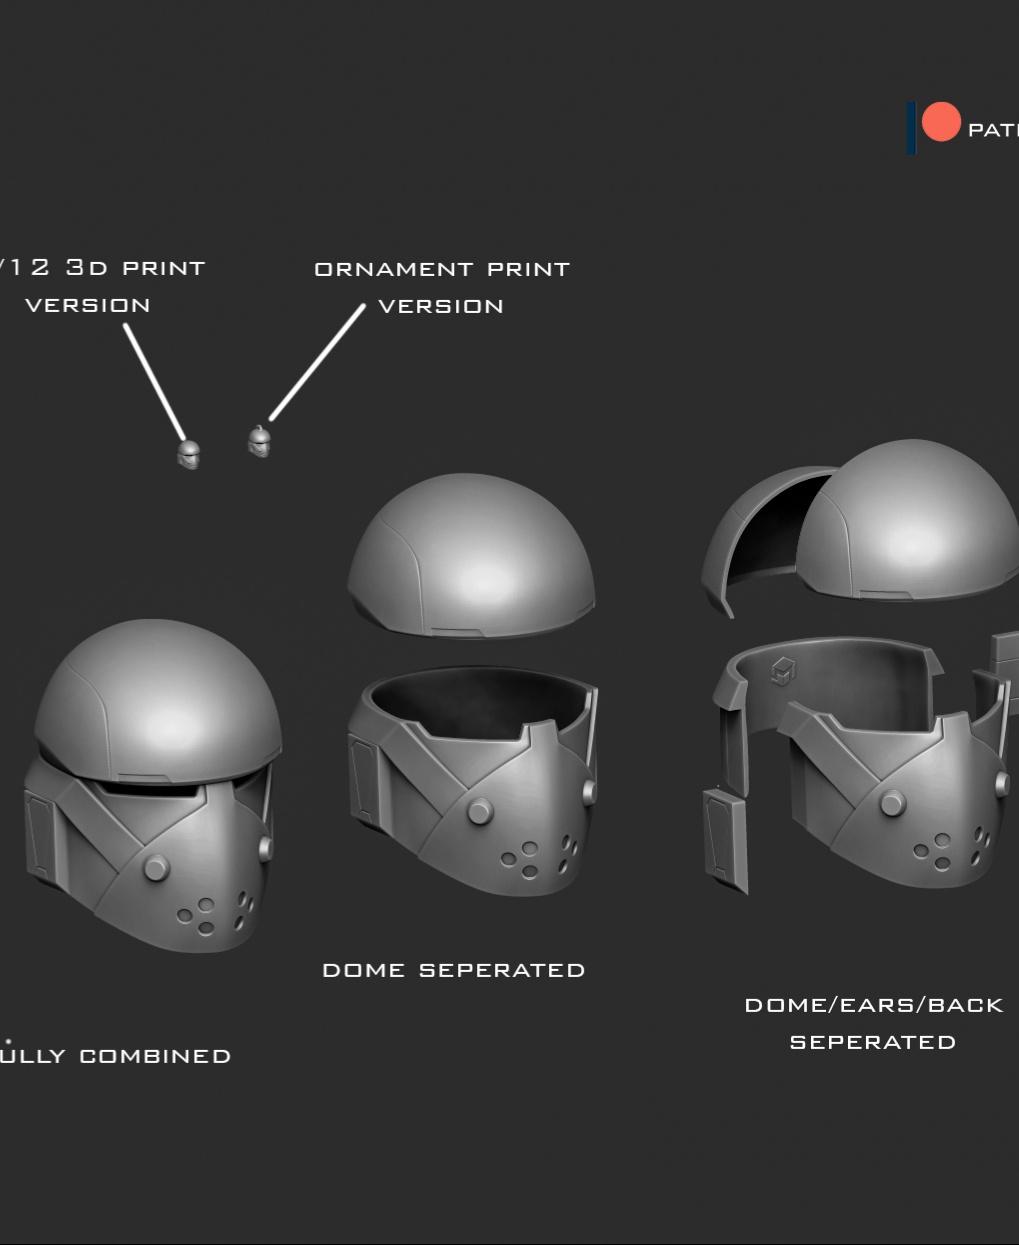 Wrecker helmet from Bad Batch 3d model